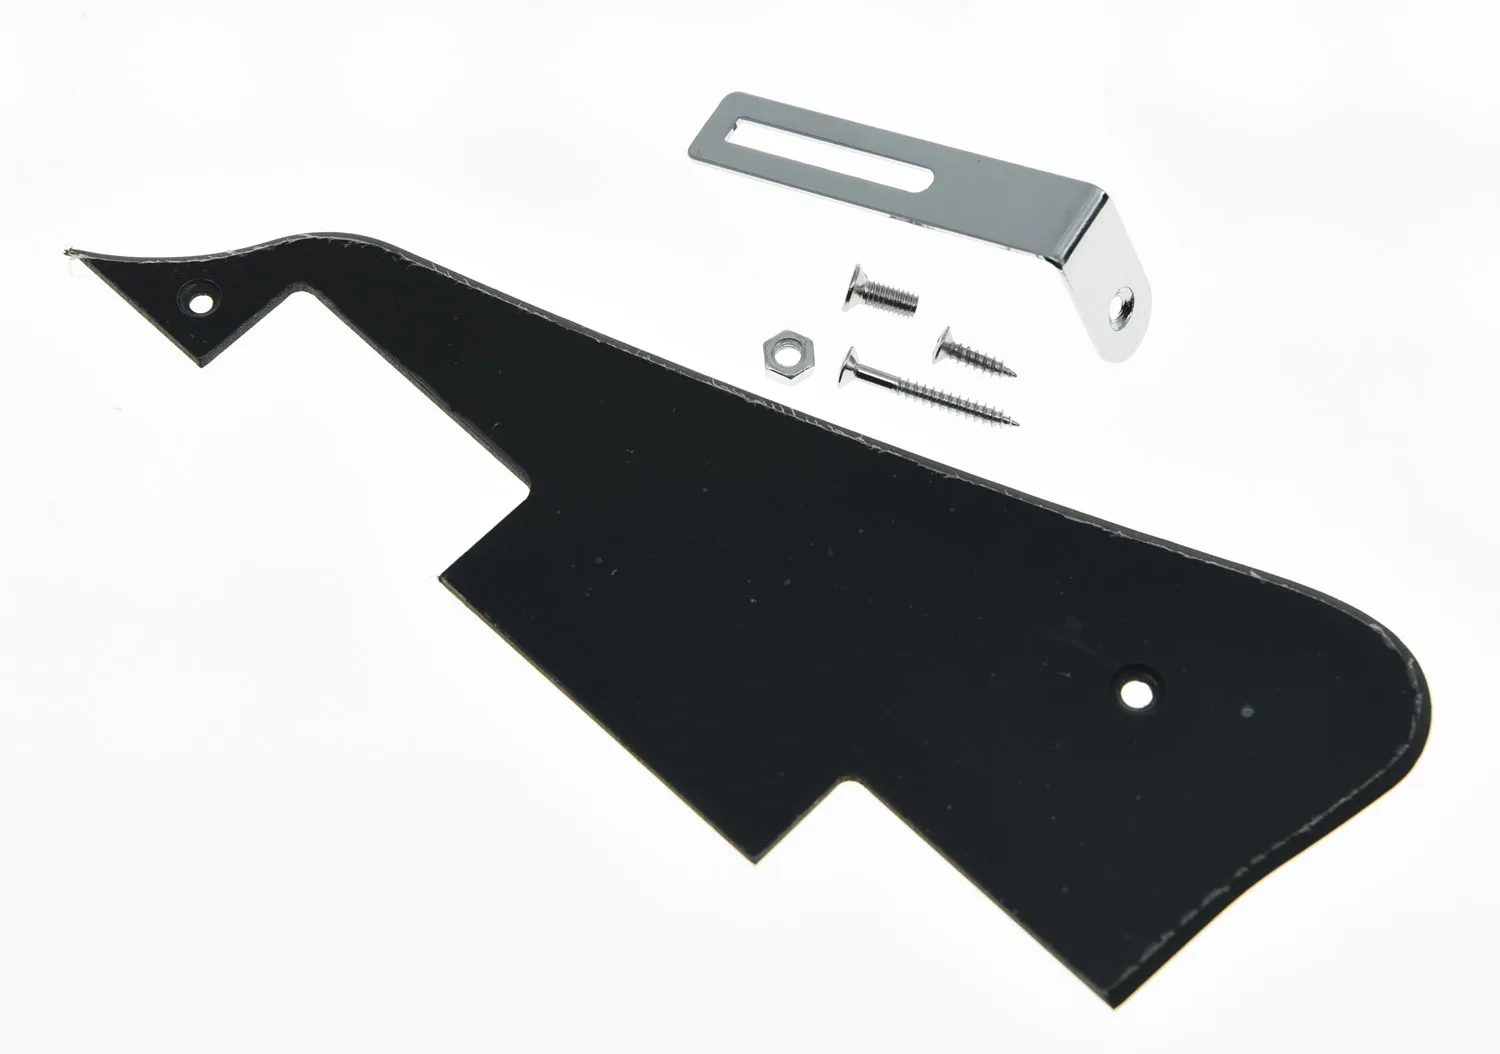 

KAISH Black 1 Ply LP Guitar Pickguard Scratch Plate with Chrome Bracket Fits For Les Paul